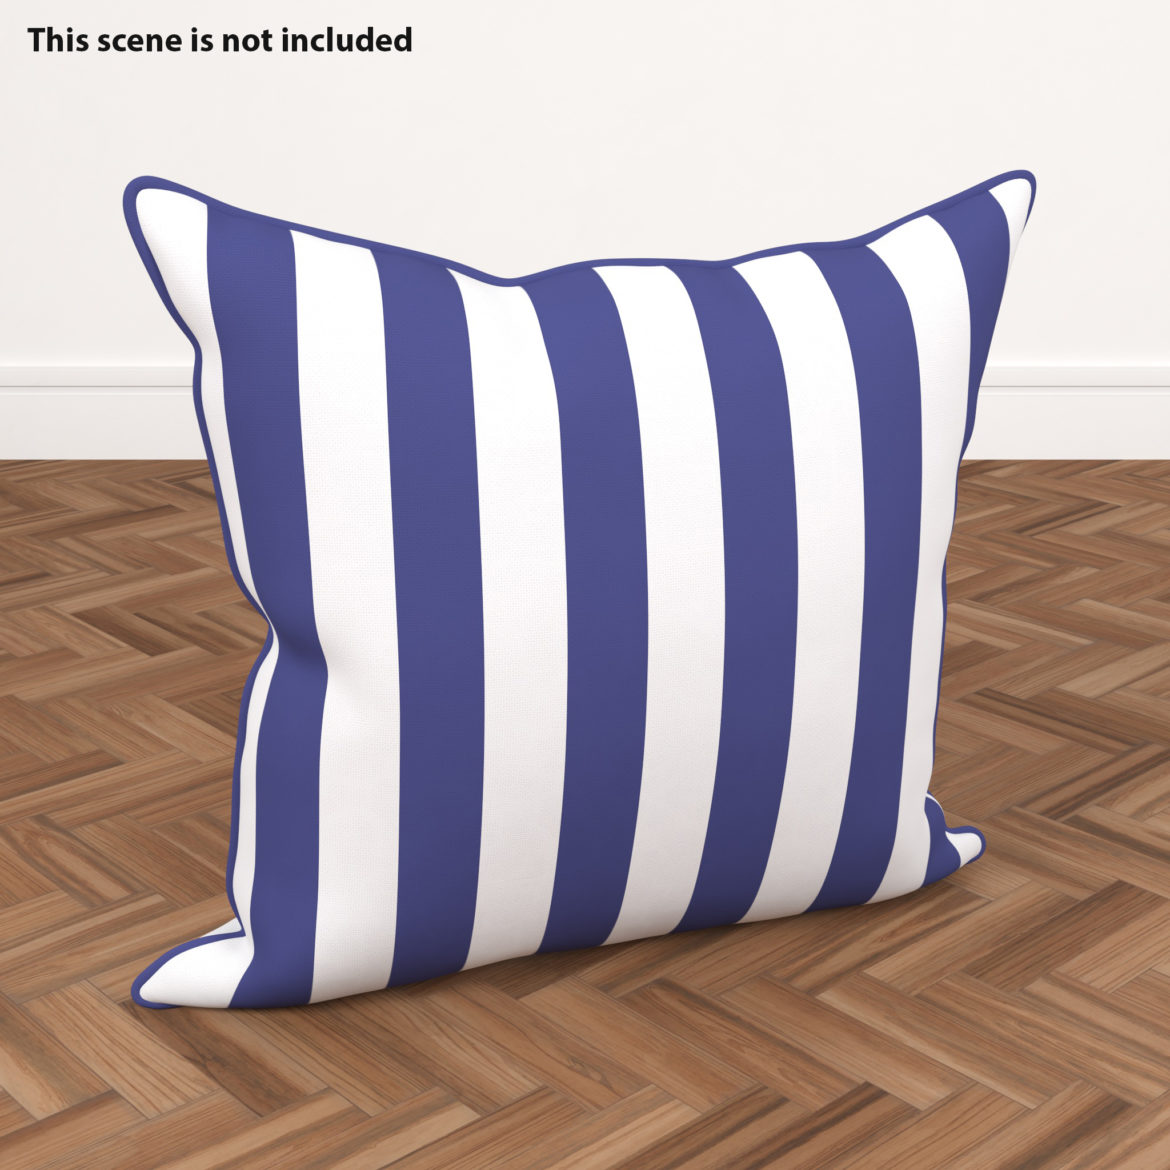  <a class="continue" href="https://www.flatpyramid.com/3d-models/furniture-3d-models/blue-white-striped-pillow/">Continue Reading<span> Blue & White Striped Pillow</span></a>